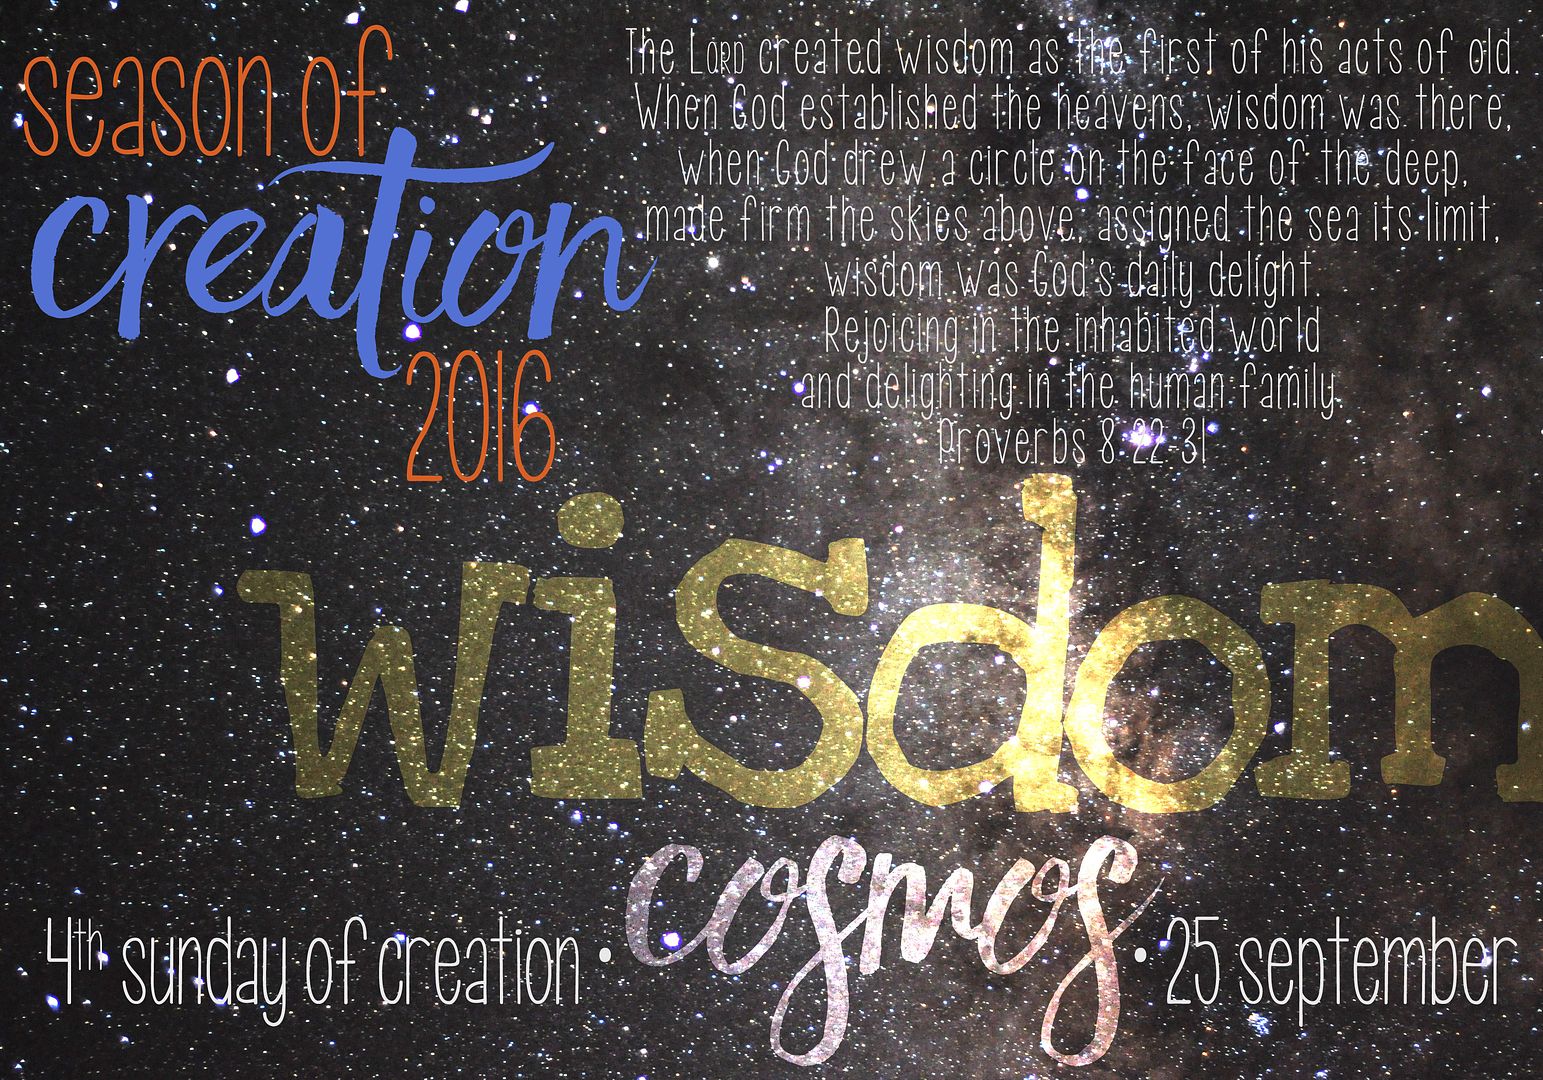 season of creation 2016, cosmos sunday